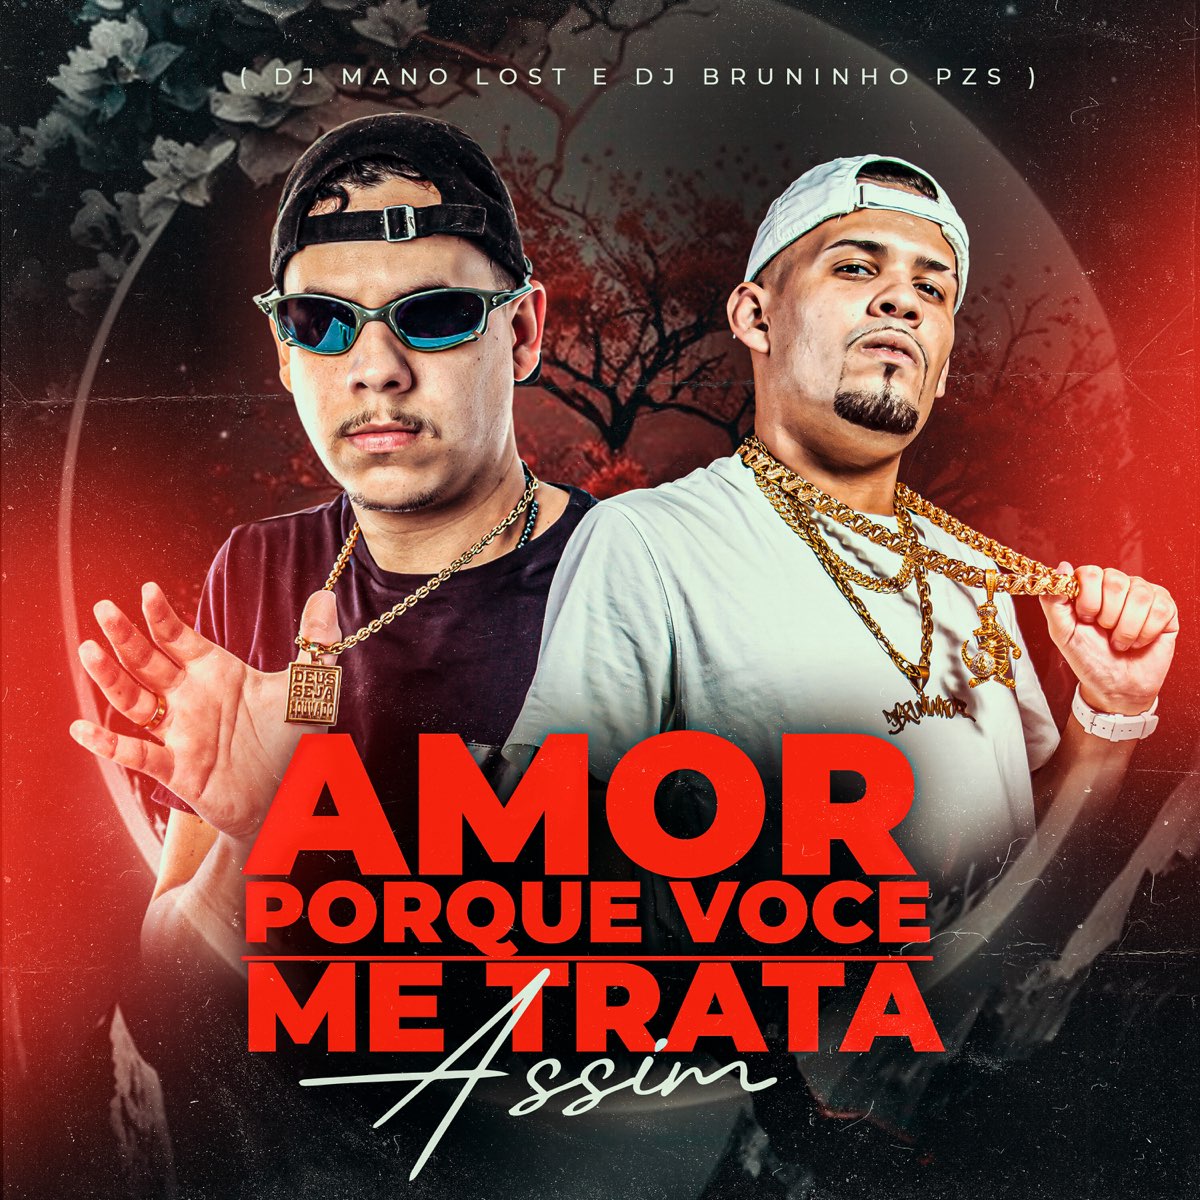 Jogo do Amor - Single - Album by MC Bruninho - Apple Music